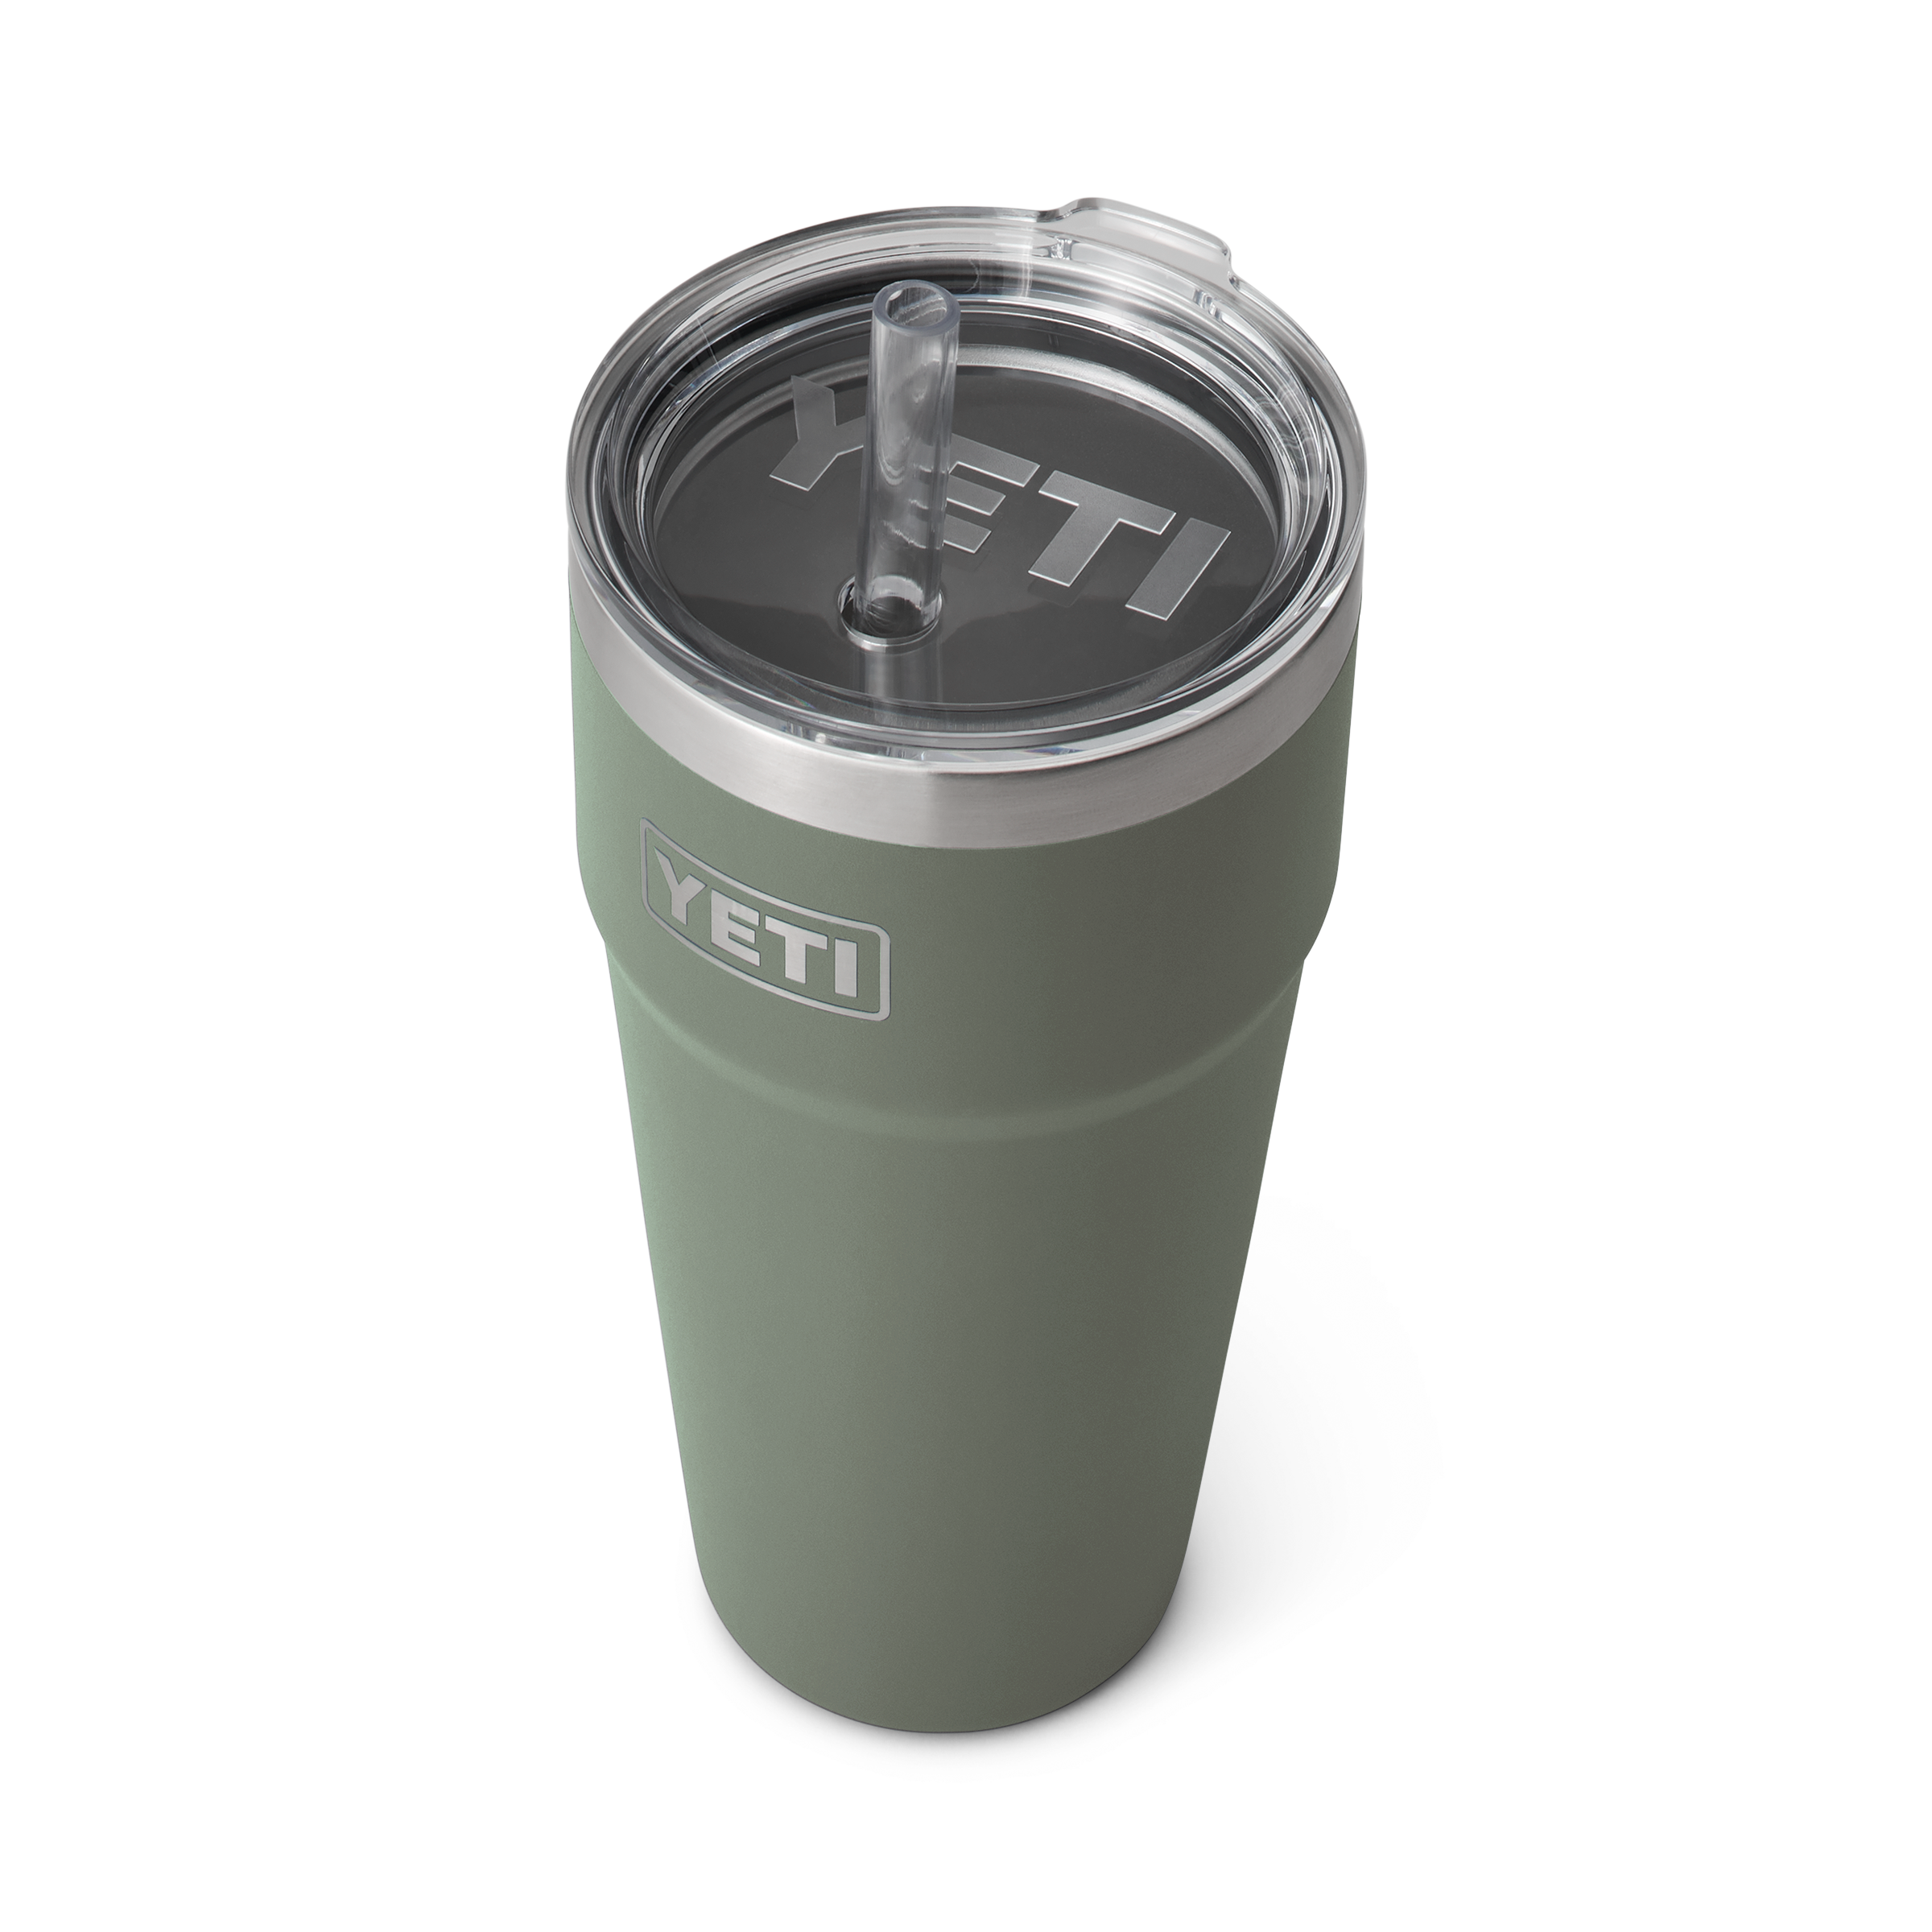  YETI Rambler 35 oz Straw Mug, Vacuum Insulated, Stainless  Steel, Canopy Green: Home & Kitchen